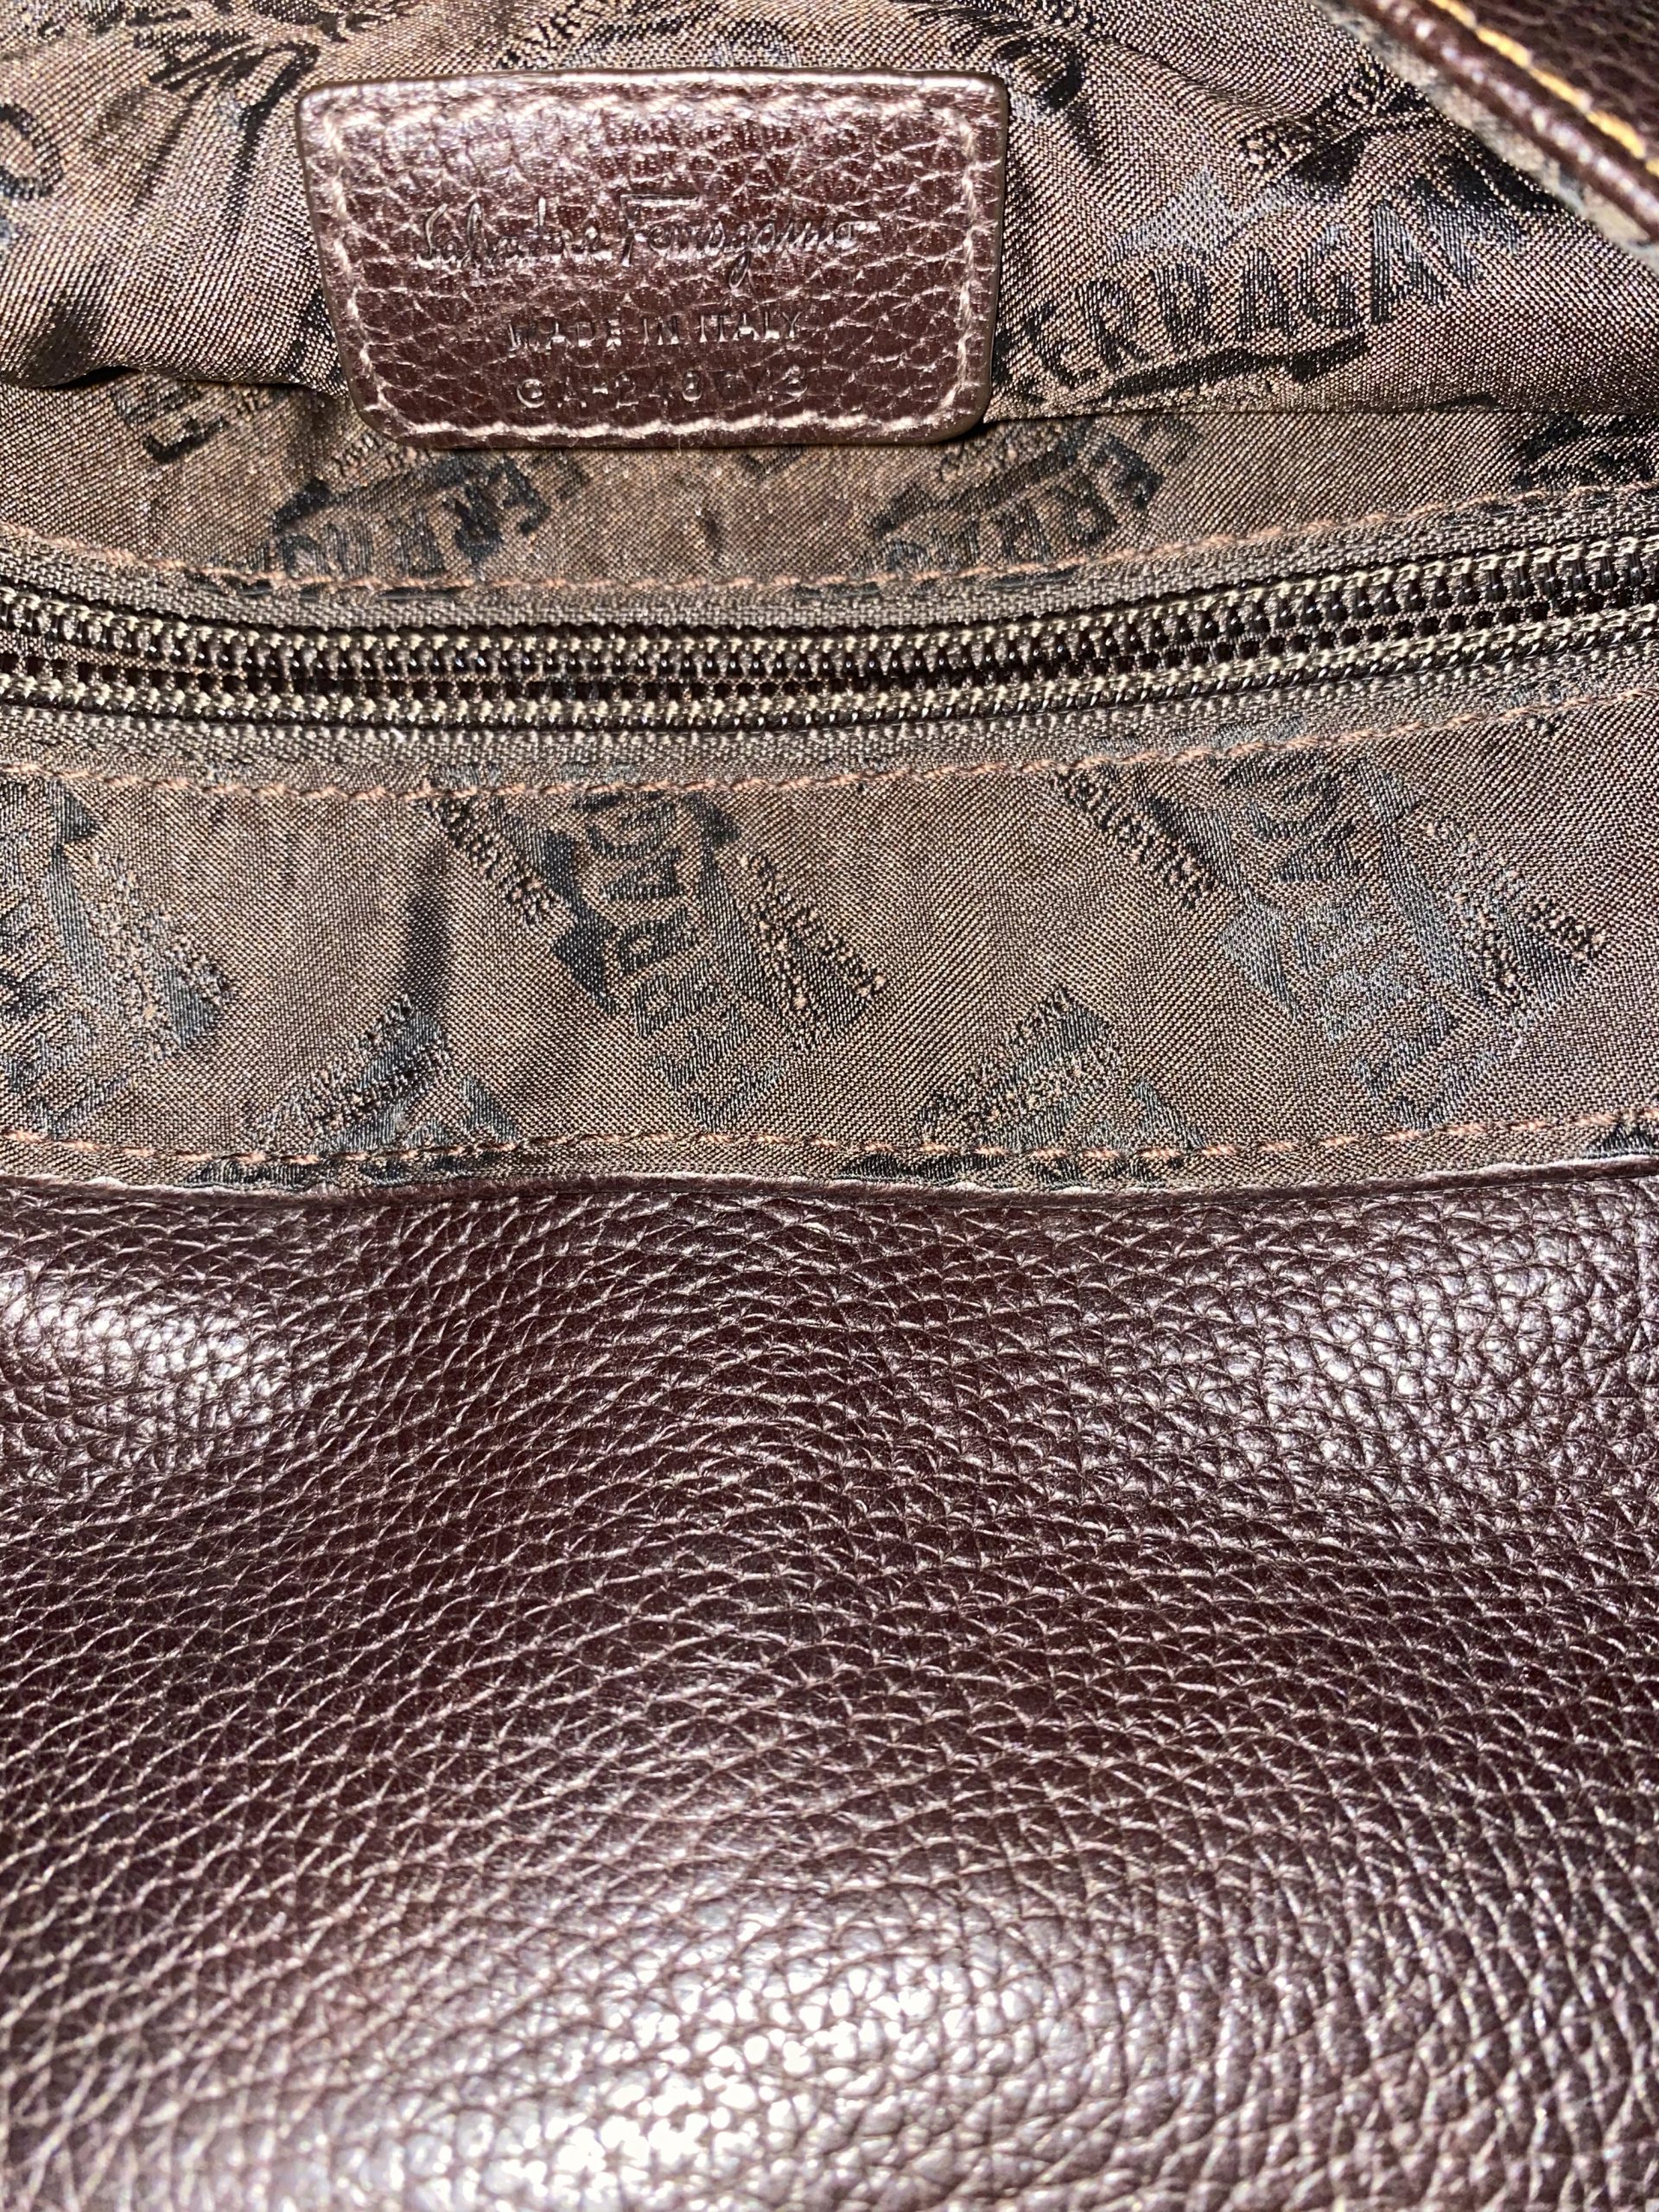 Michael Kors - Authenticated Handbag - Leather Black Plain for Women, Very Good Condition